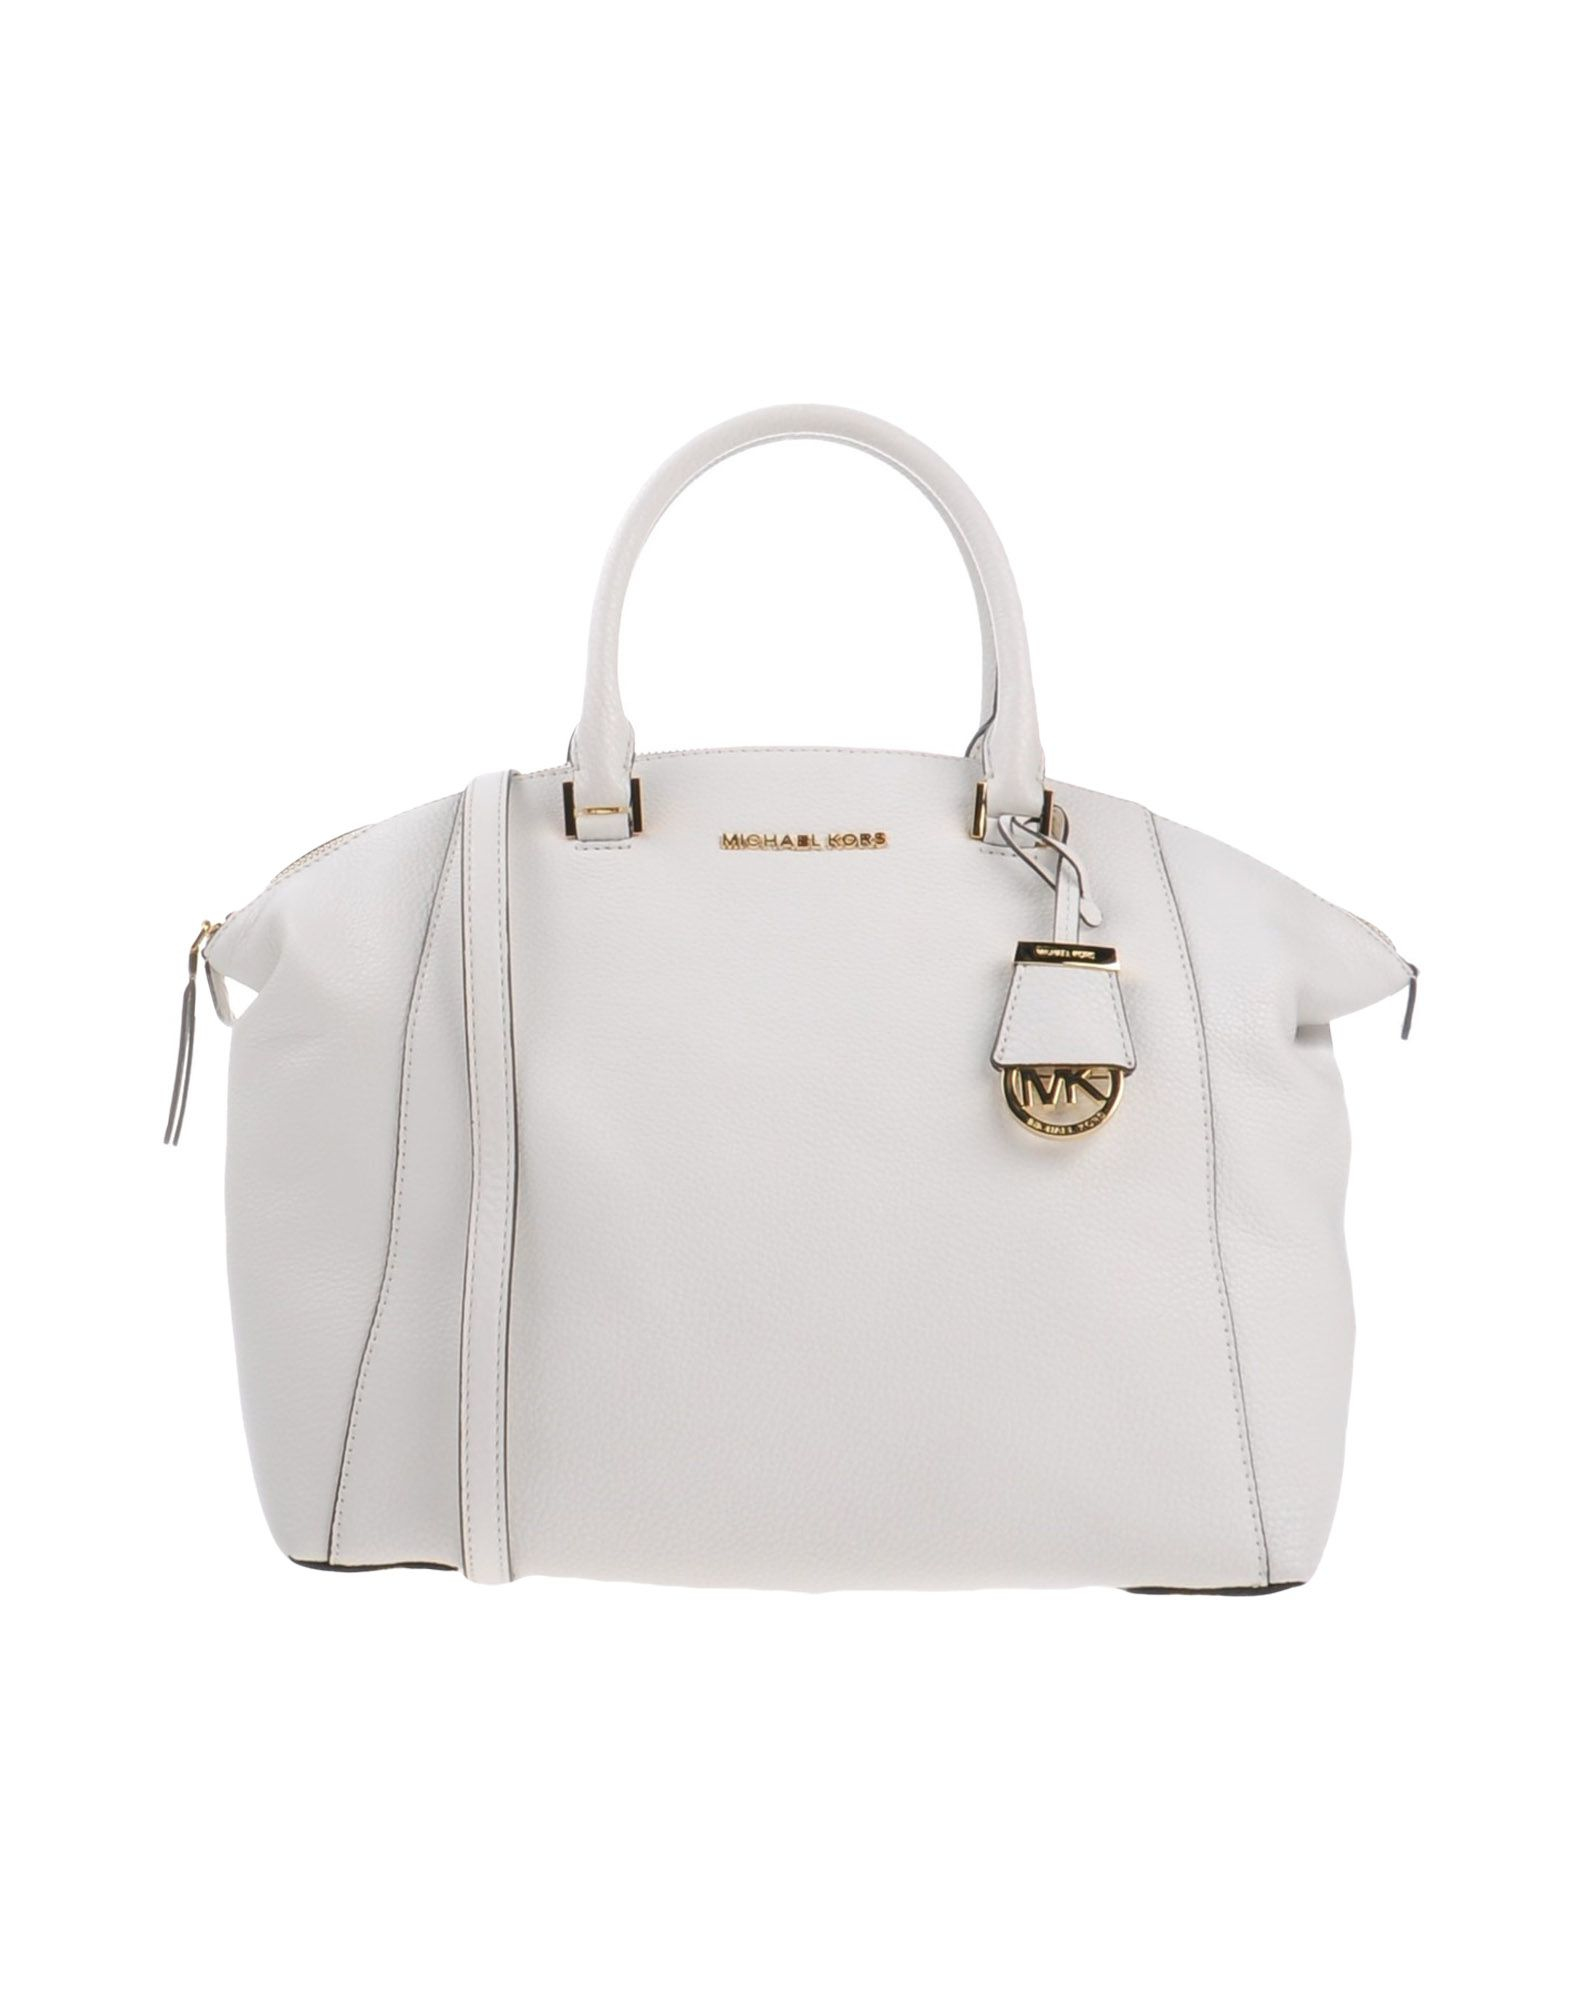 Michael Kors White Handbags On Sale | semashow.com